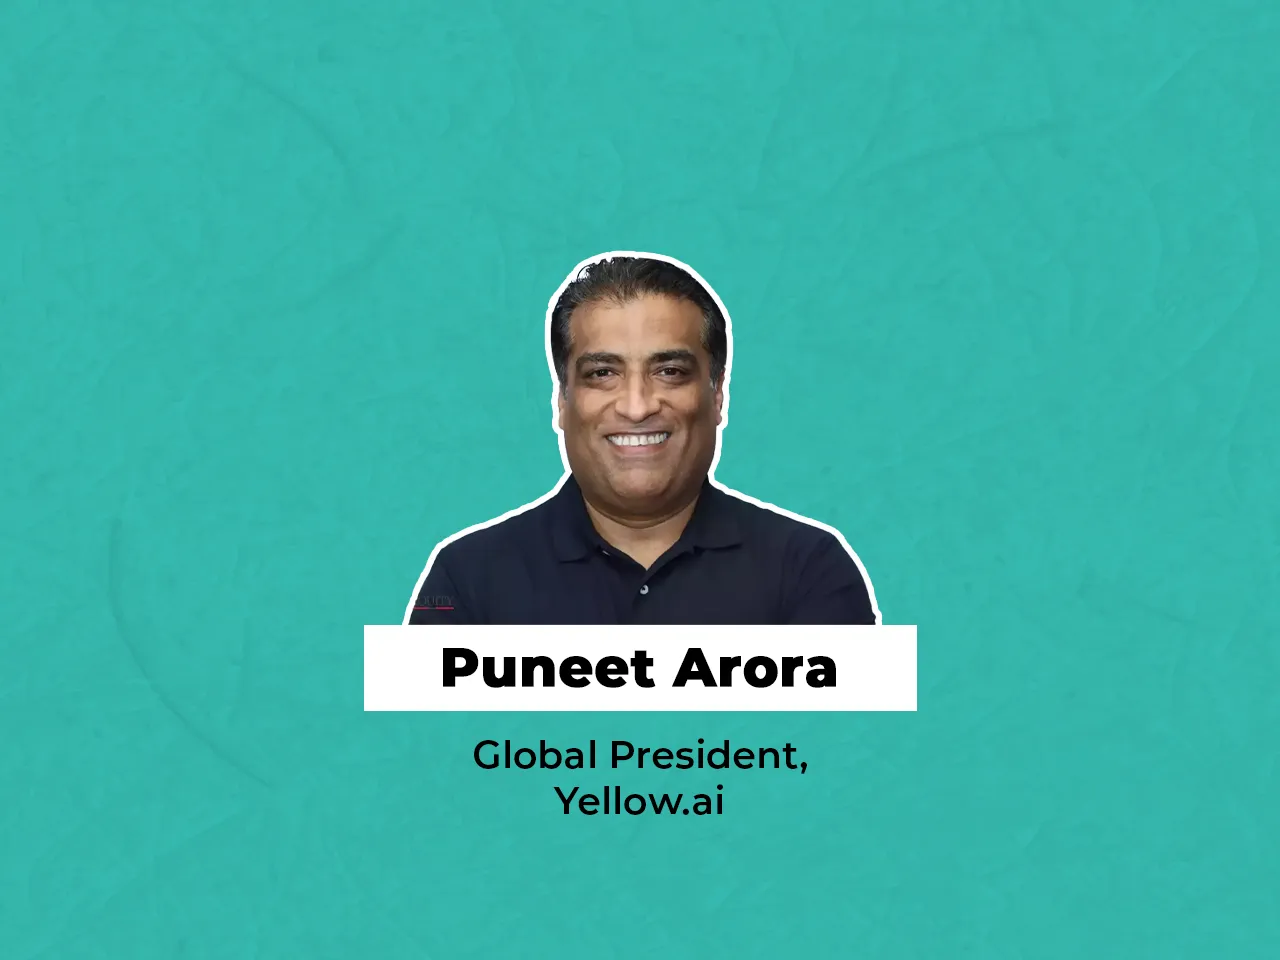 Puneet Arora joins Yellow.ai as Global President